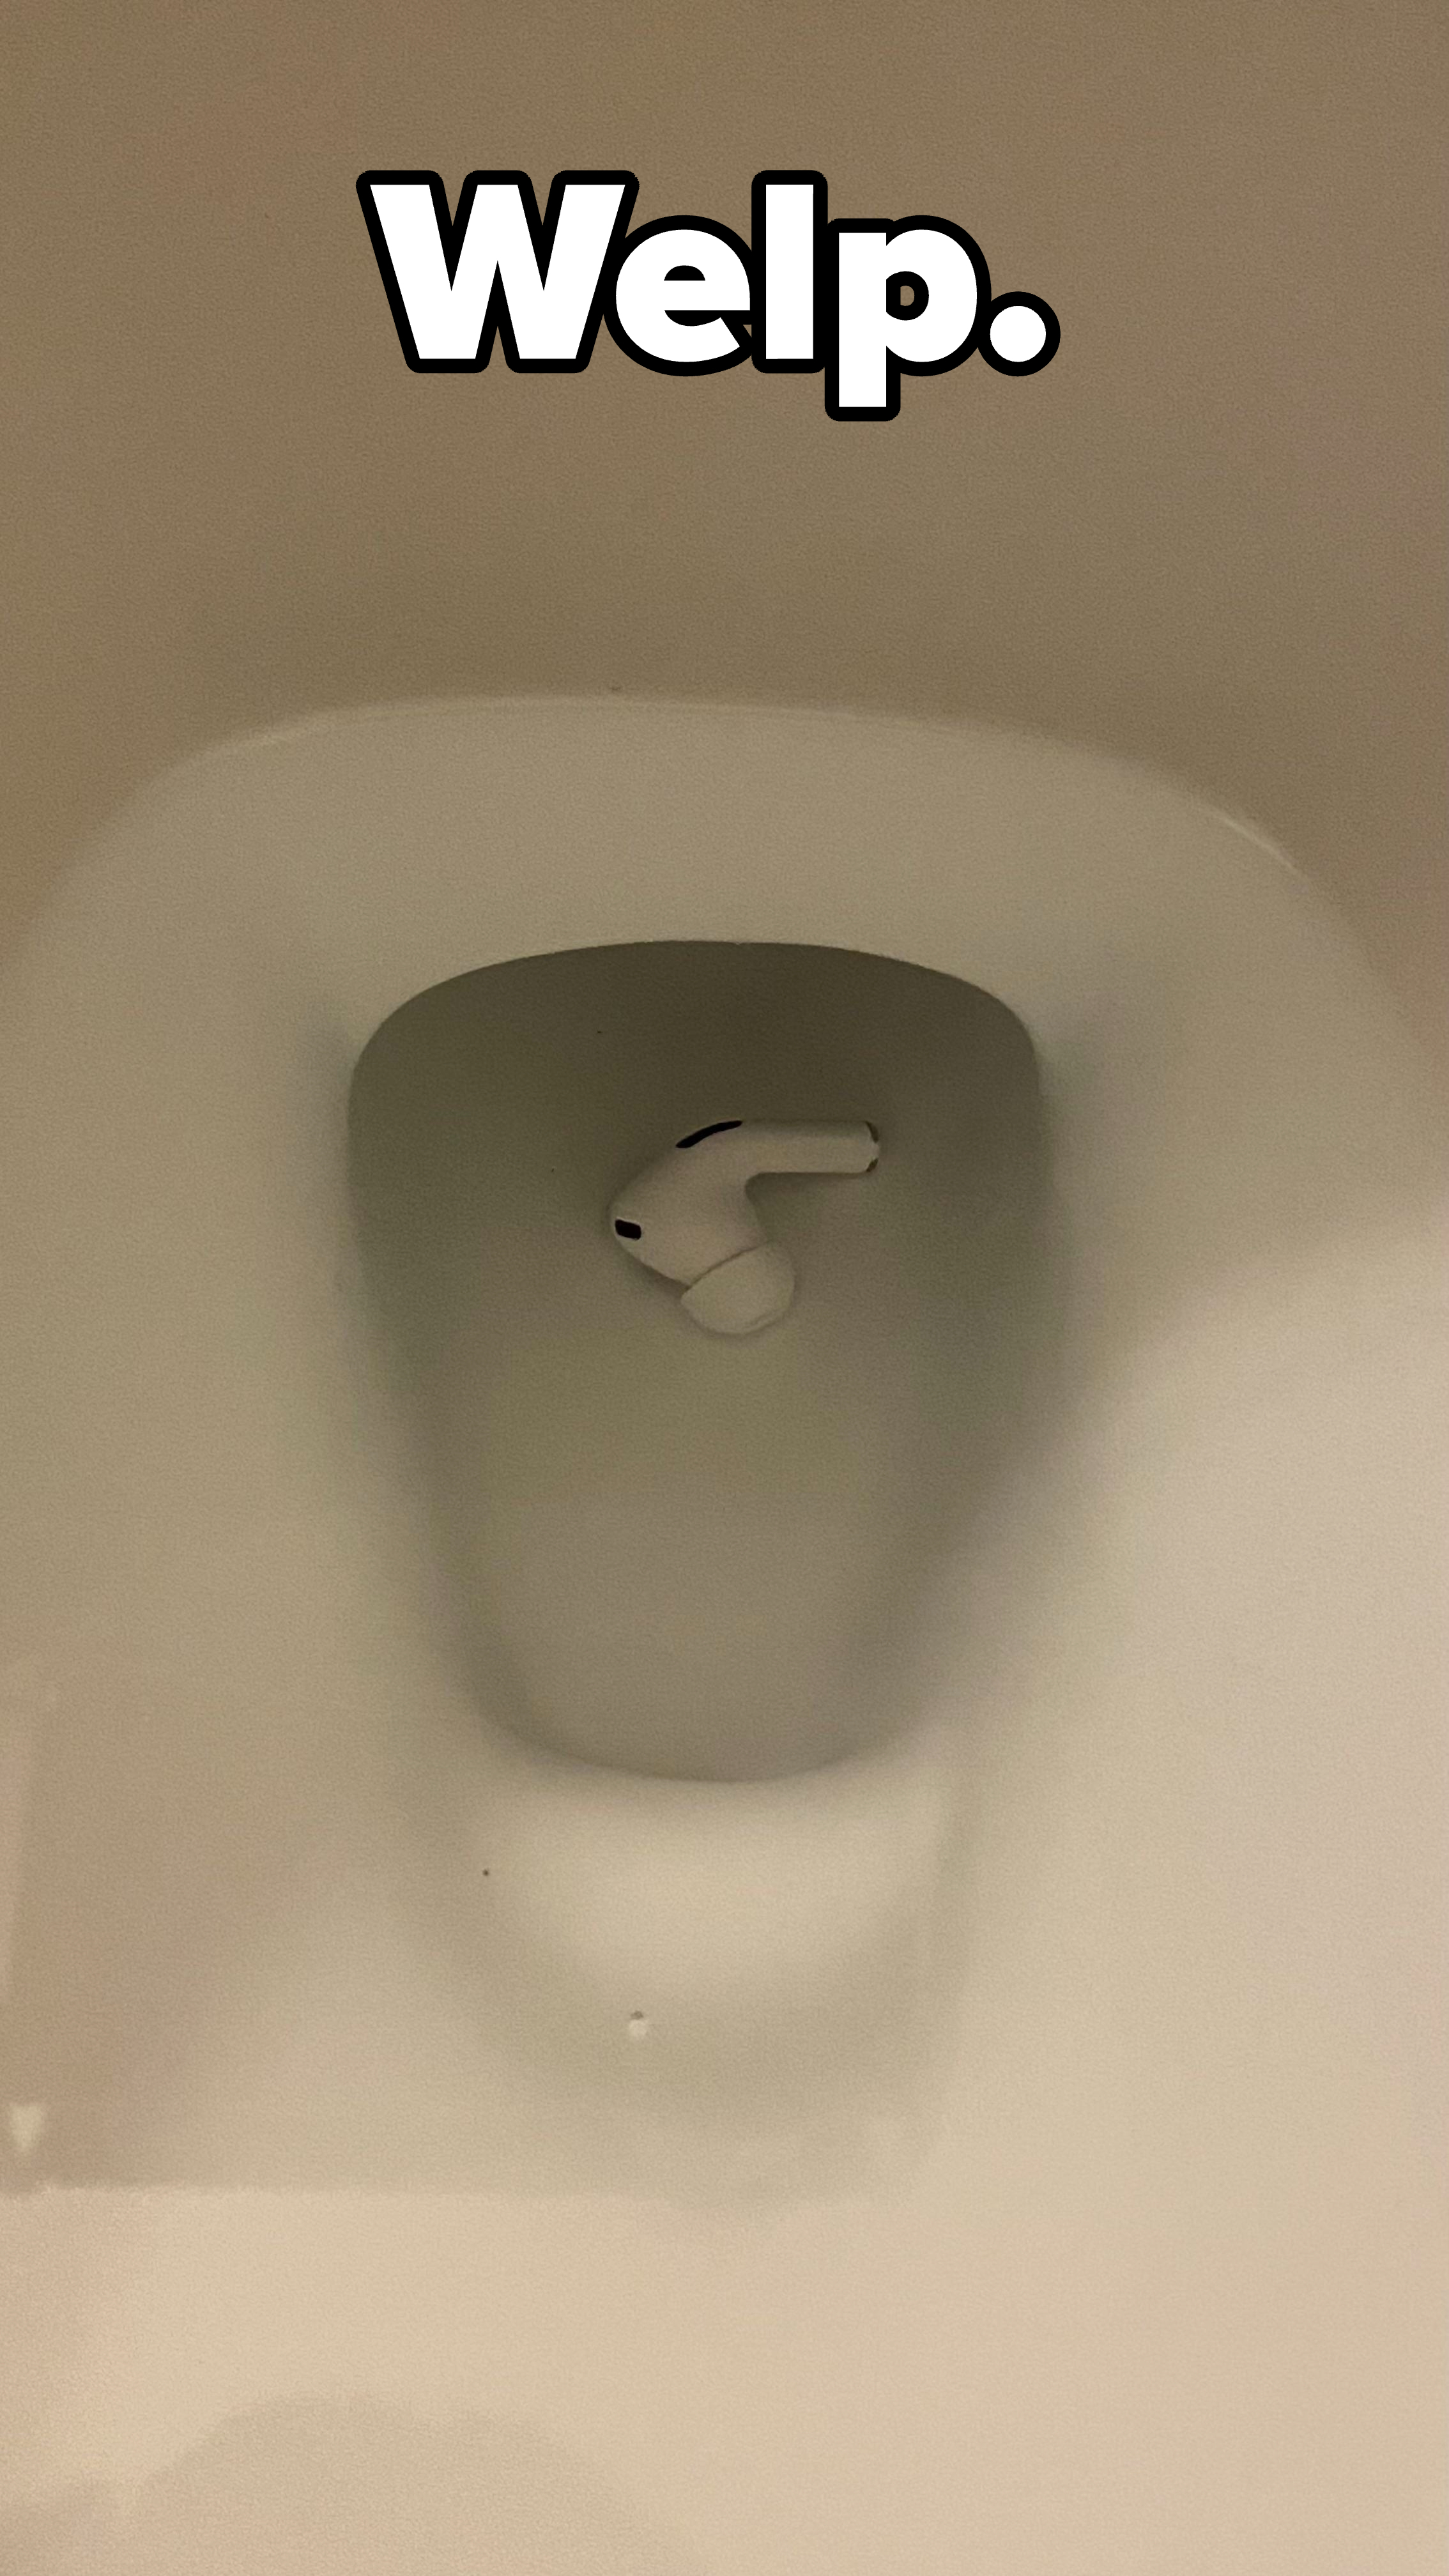 An AirPod in a toilet